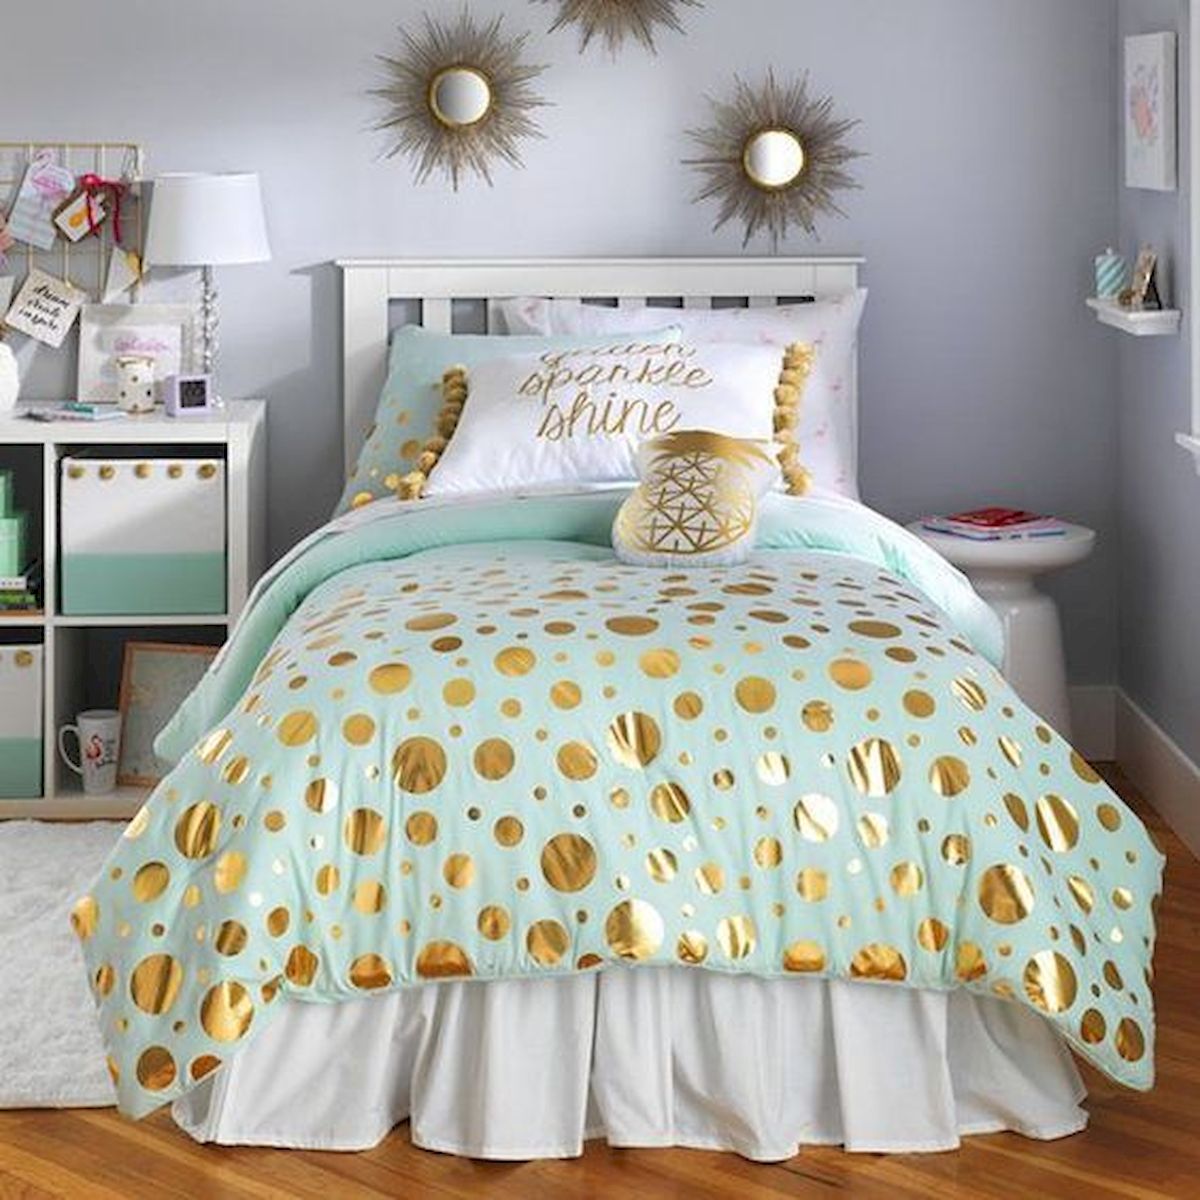 50 Beautiful Bedroom Design Ideas For Kids (2)